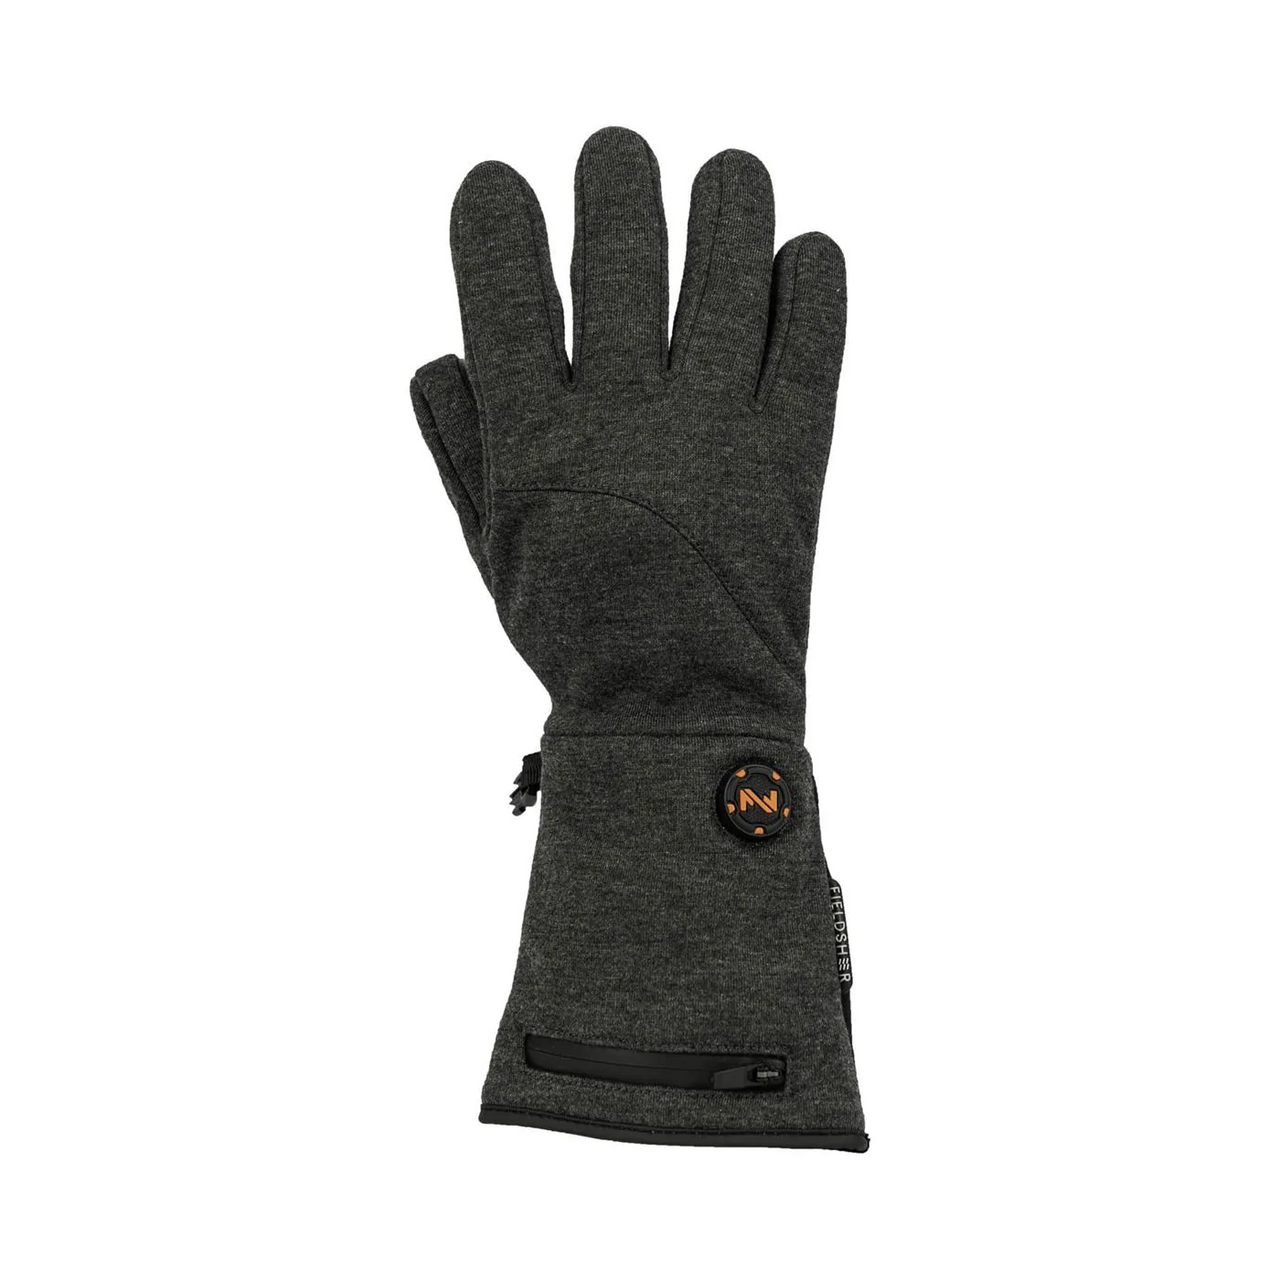 FieldSheer Unisex Thermal Heated Glove (7.4V)